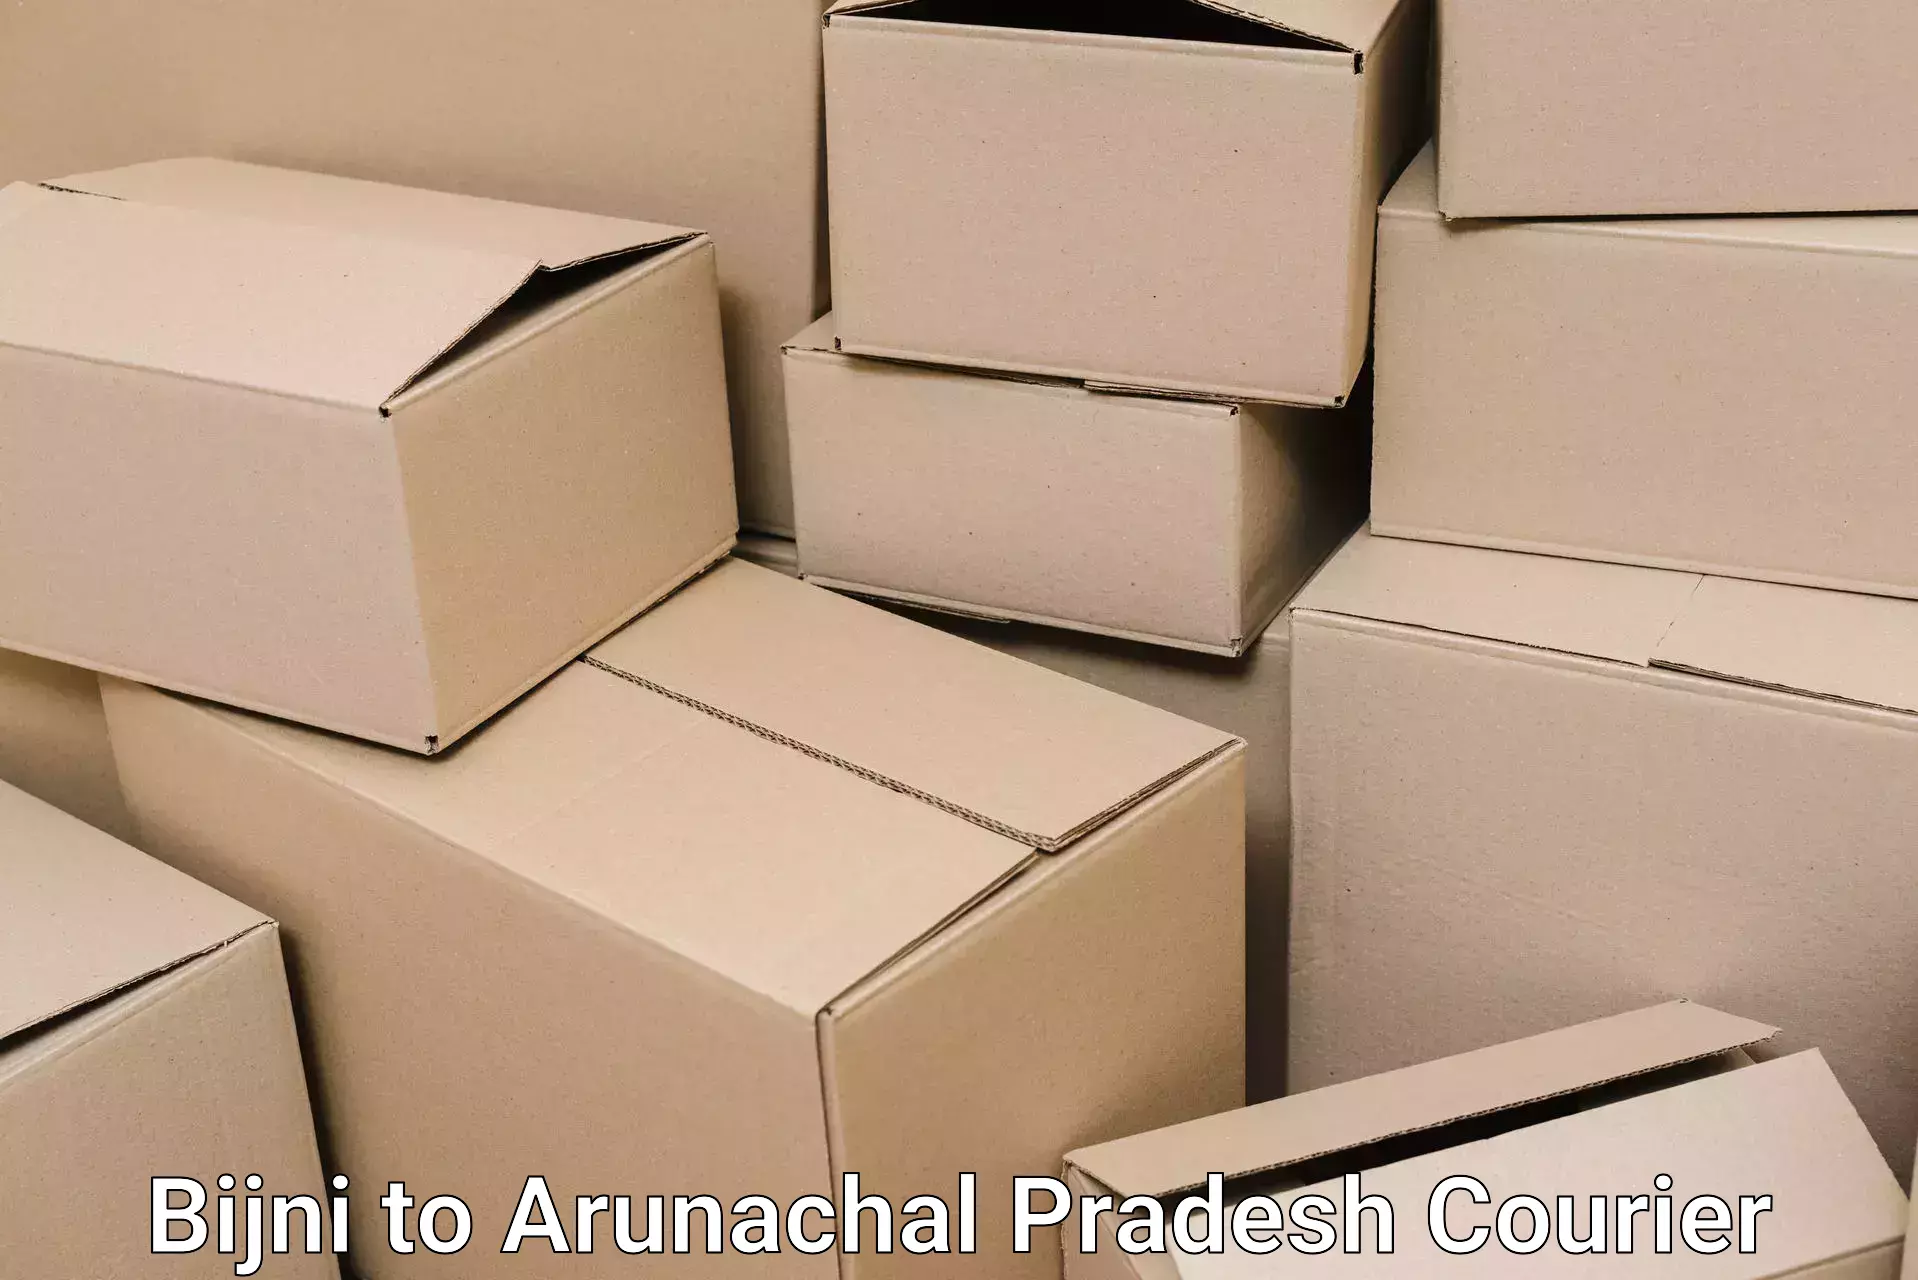 Efficient moving company Bijni to Arunachal Pradesh